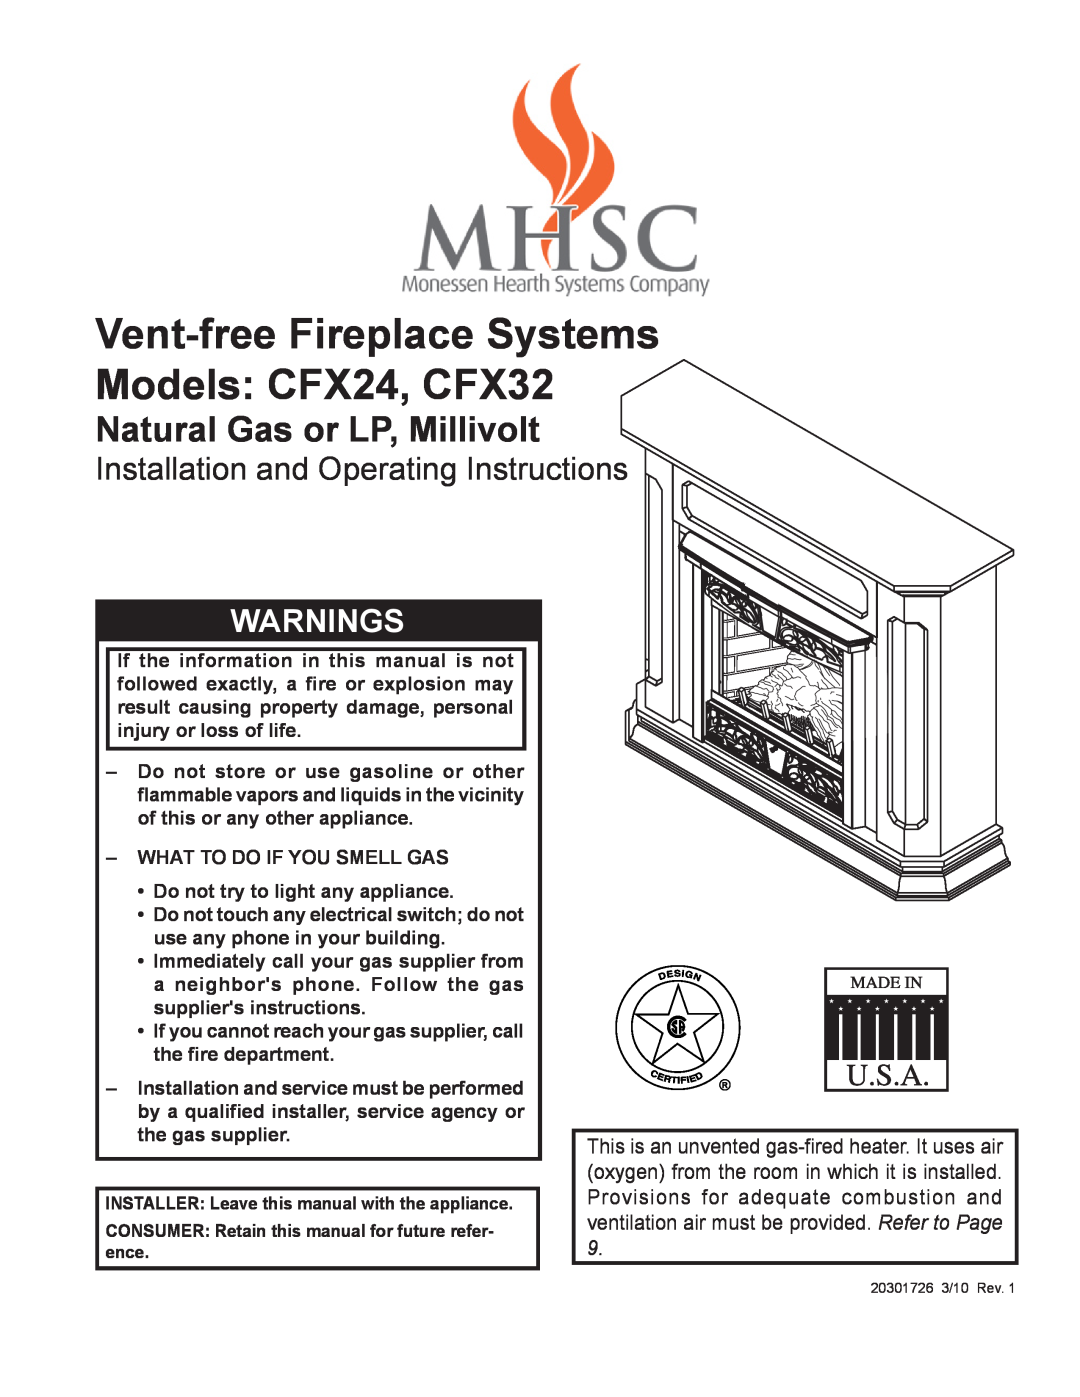 Monessen Hearth manual Vent-freeFireplace Systems Models CFX24, CFX32, Natural Gas or LP, Millivolt, Warnings 